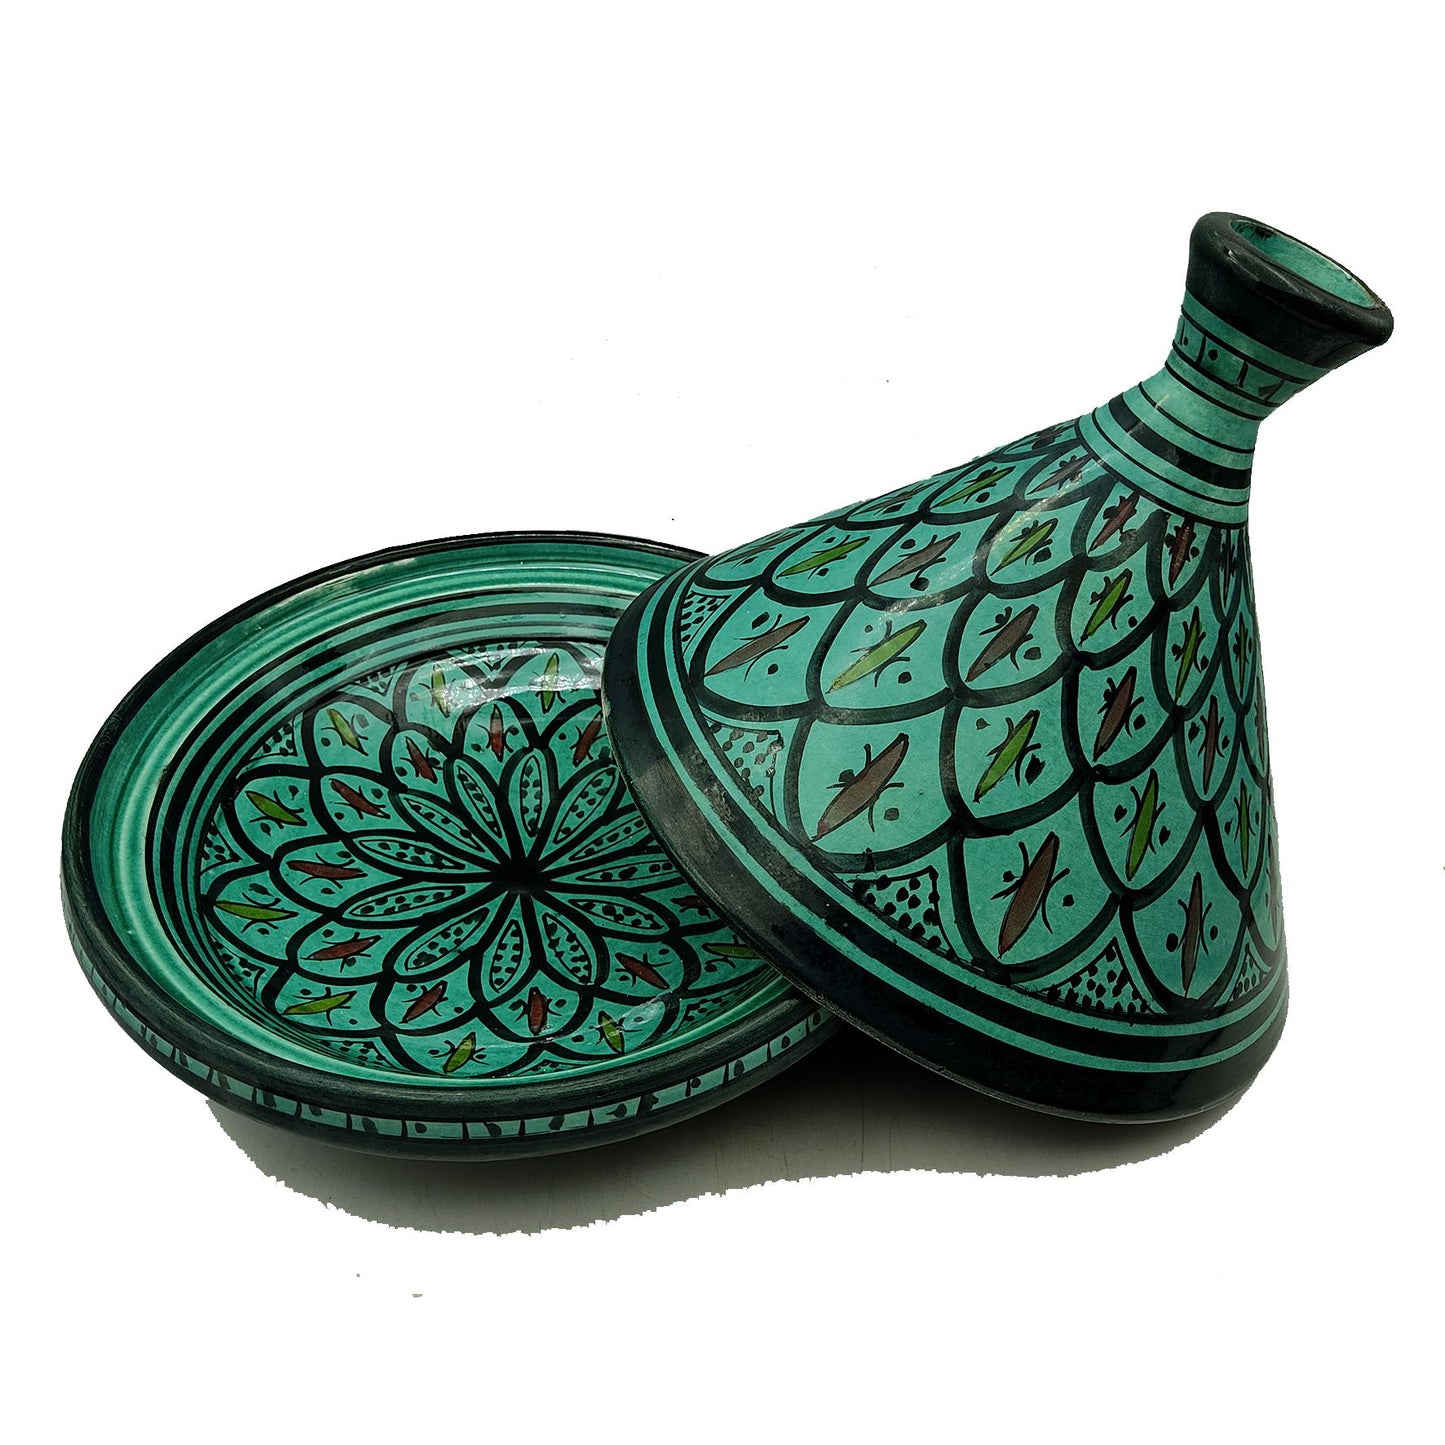 Decoratieve Tajine Keramiek Terracotta Marokko Marokkaans Etnisch handbeschilderd 2302221119